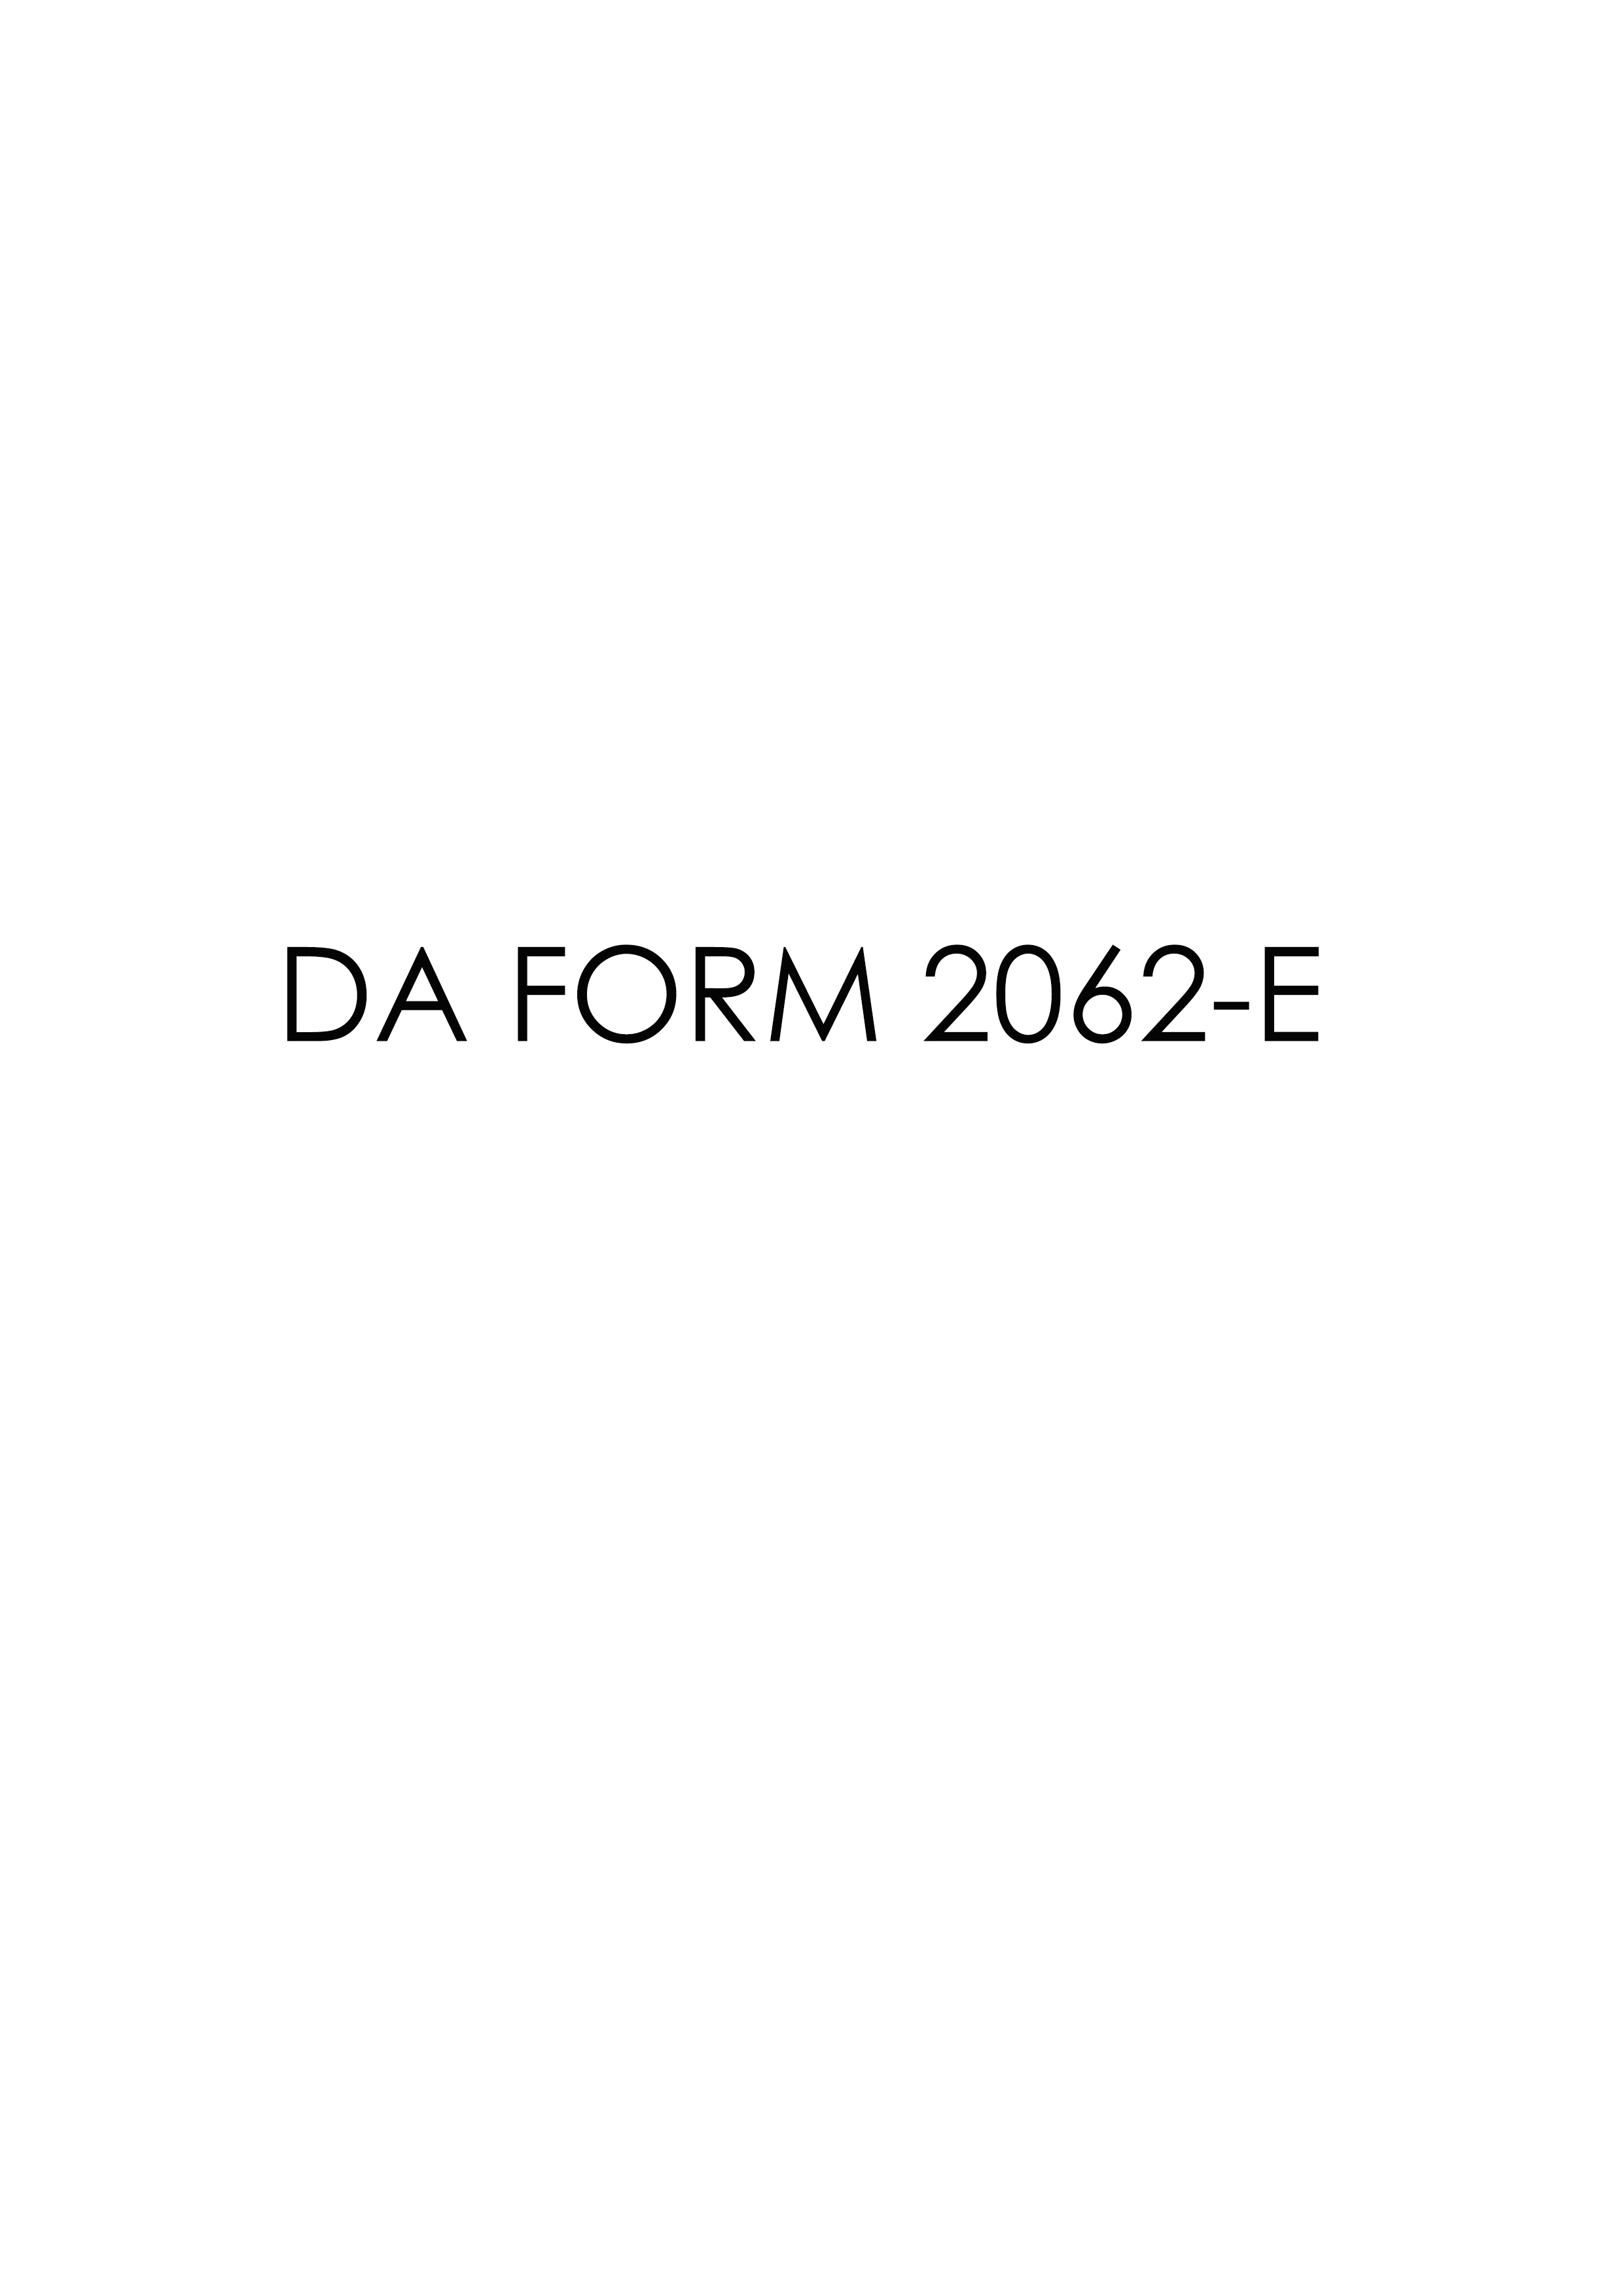 Download da 2062-E Form